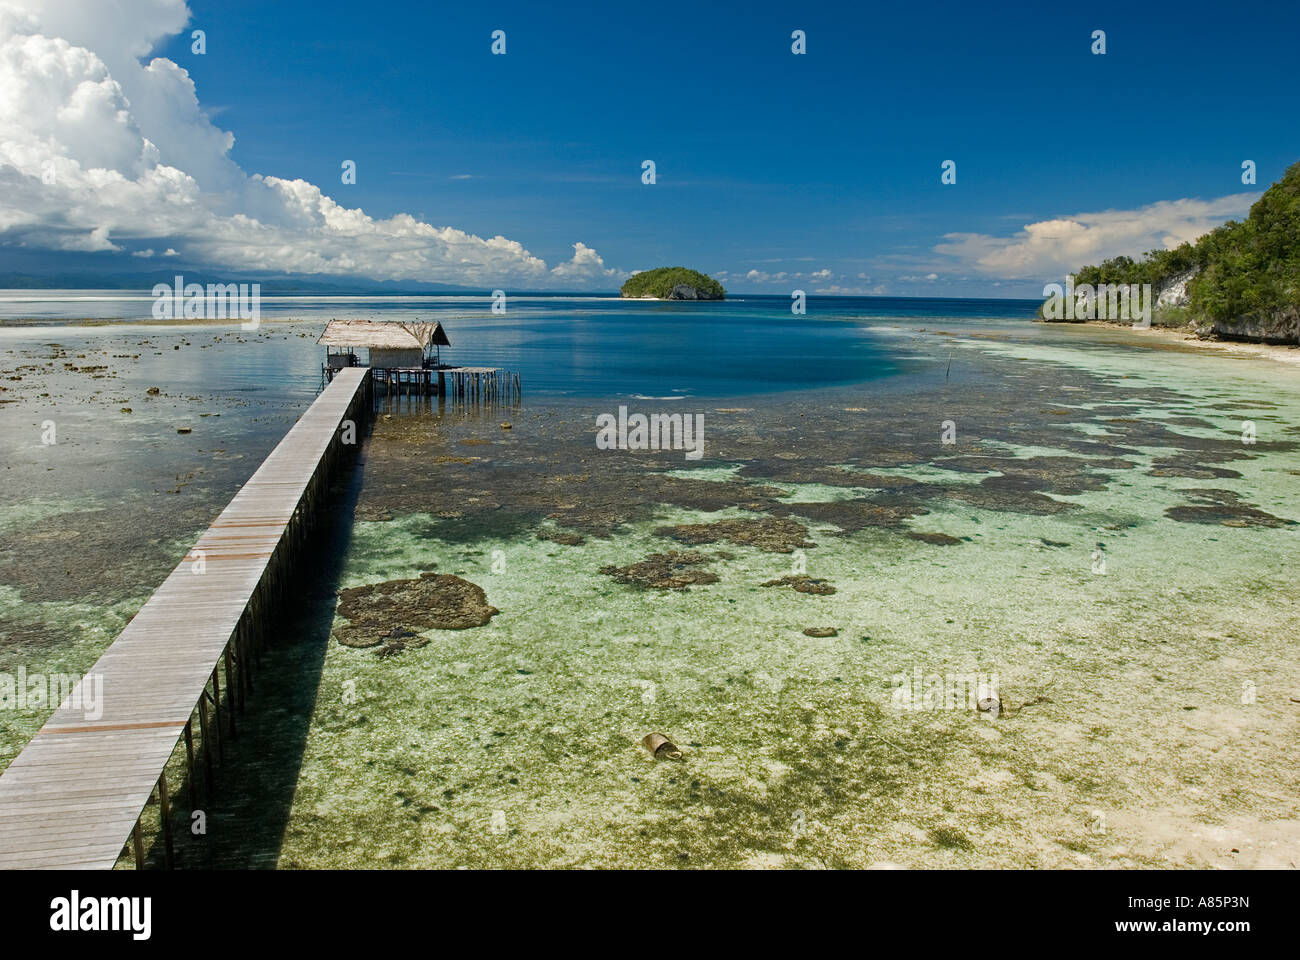 Scenic view of Kri Island Resort jetty and coral reefs, Raja Ampat, Indonesia. Stock Photo